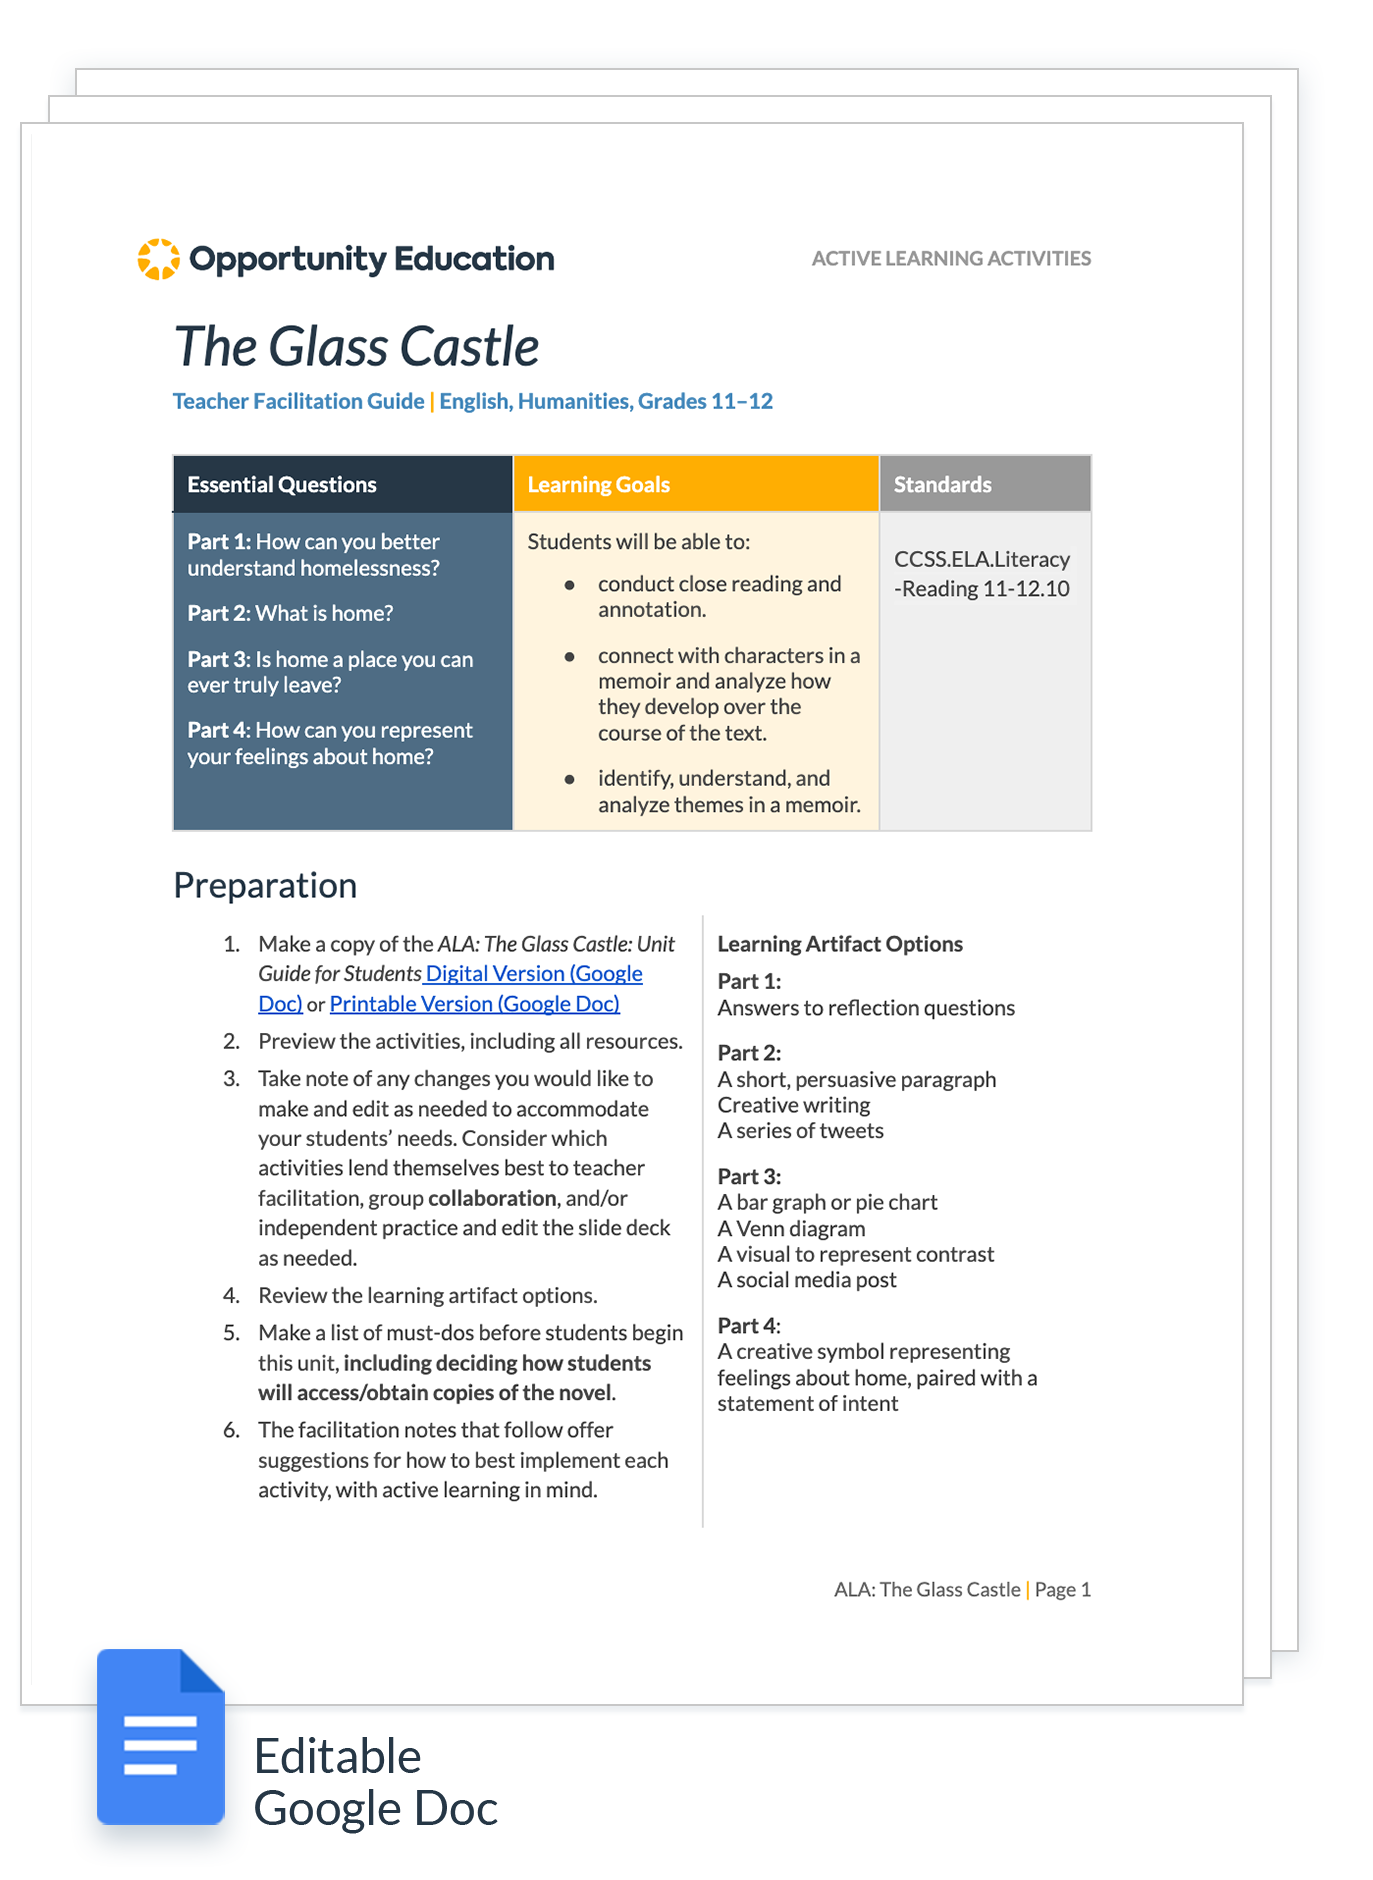 A preview of the Glass Castle teacher facilitation guide